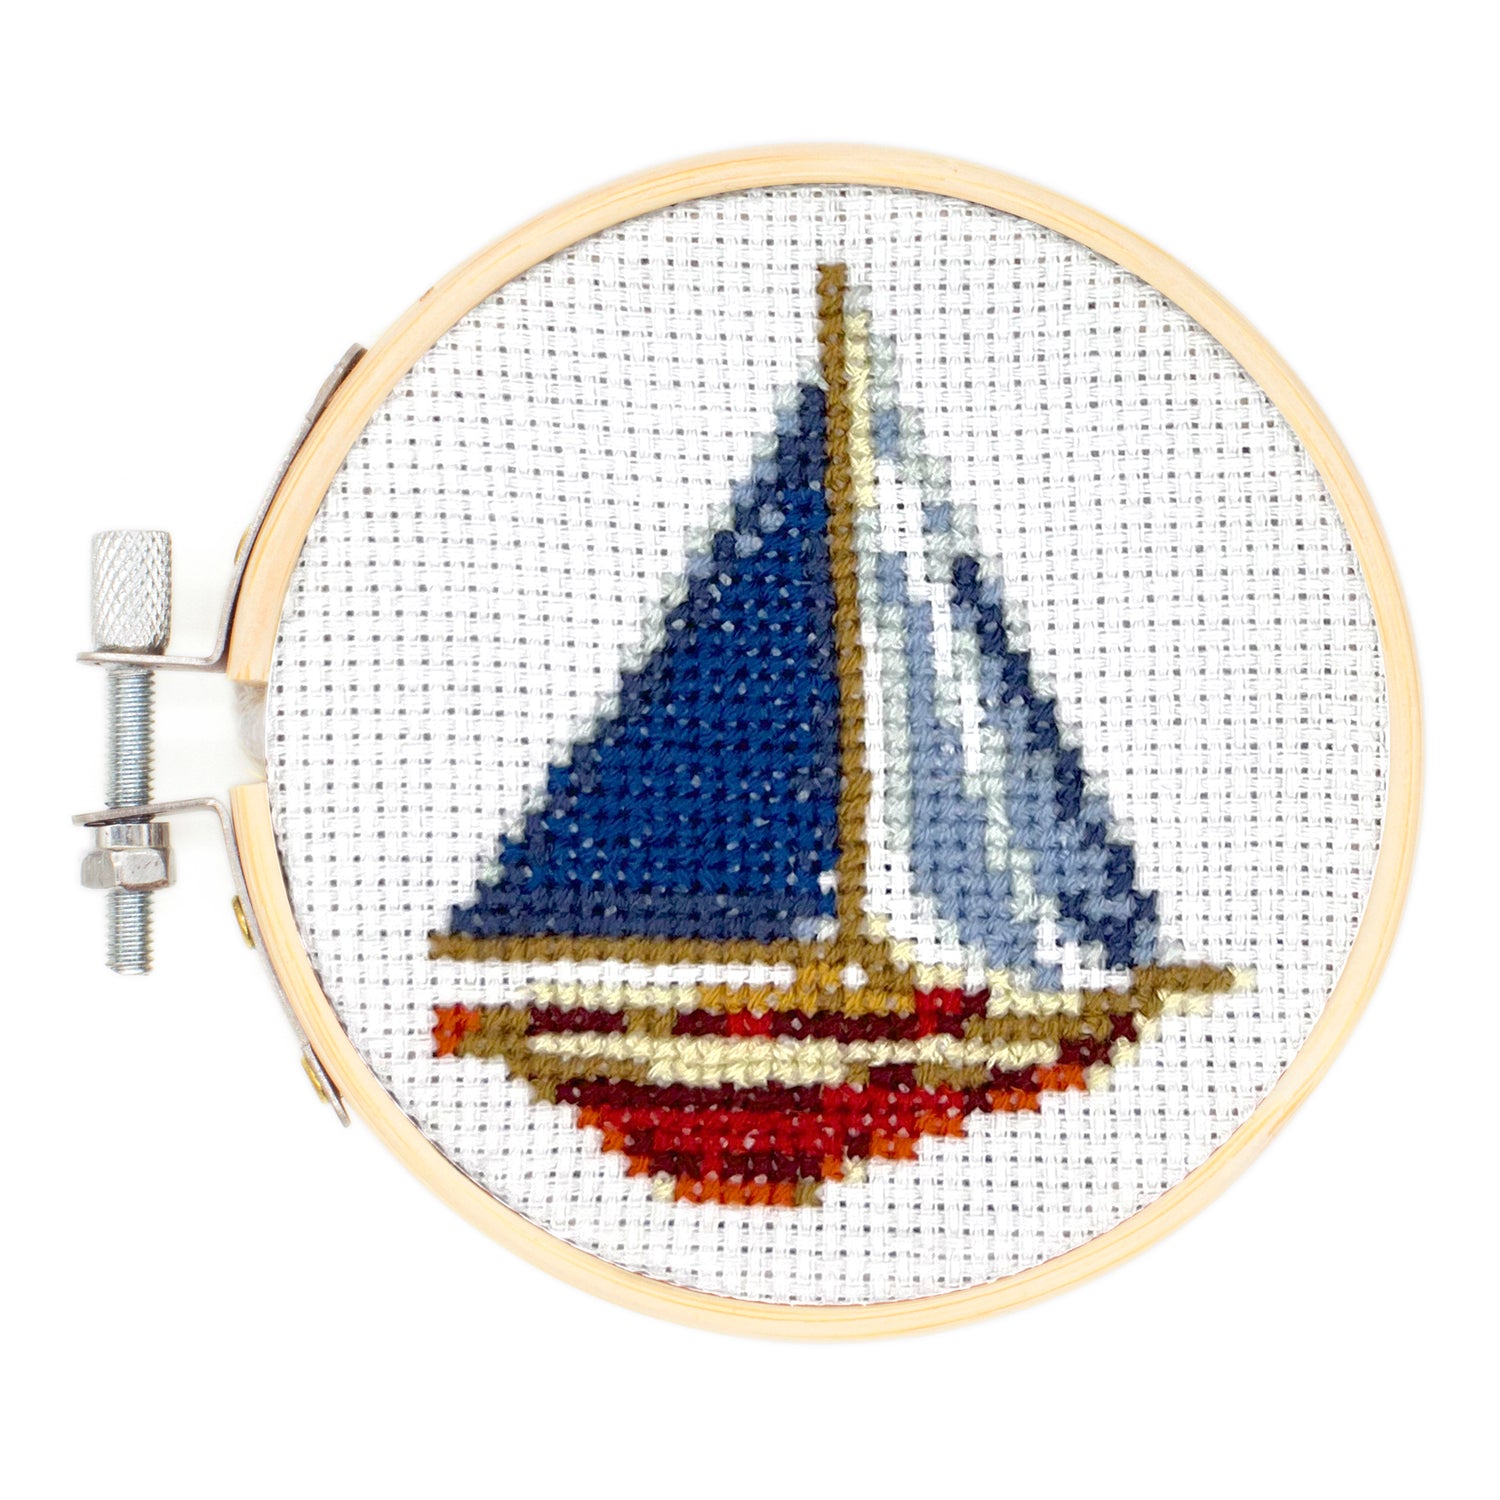 Sailboat Mini Cross Stitch Embroidery Kit